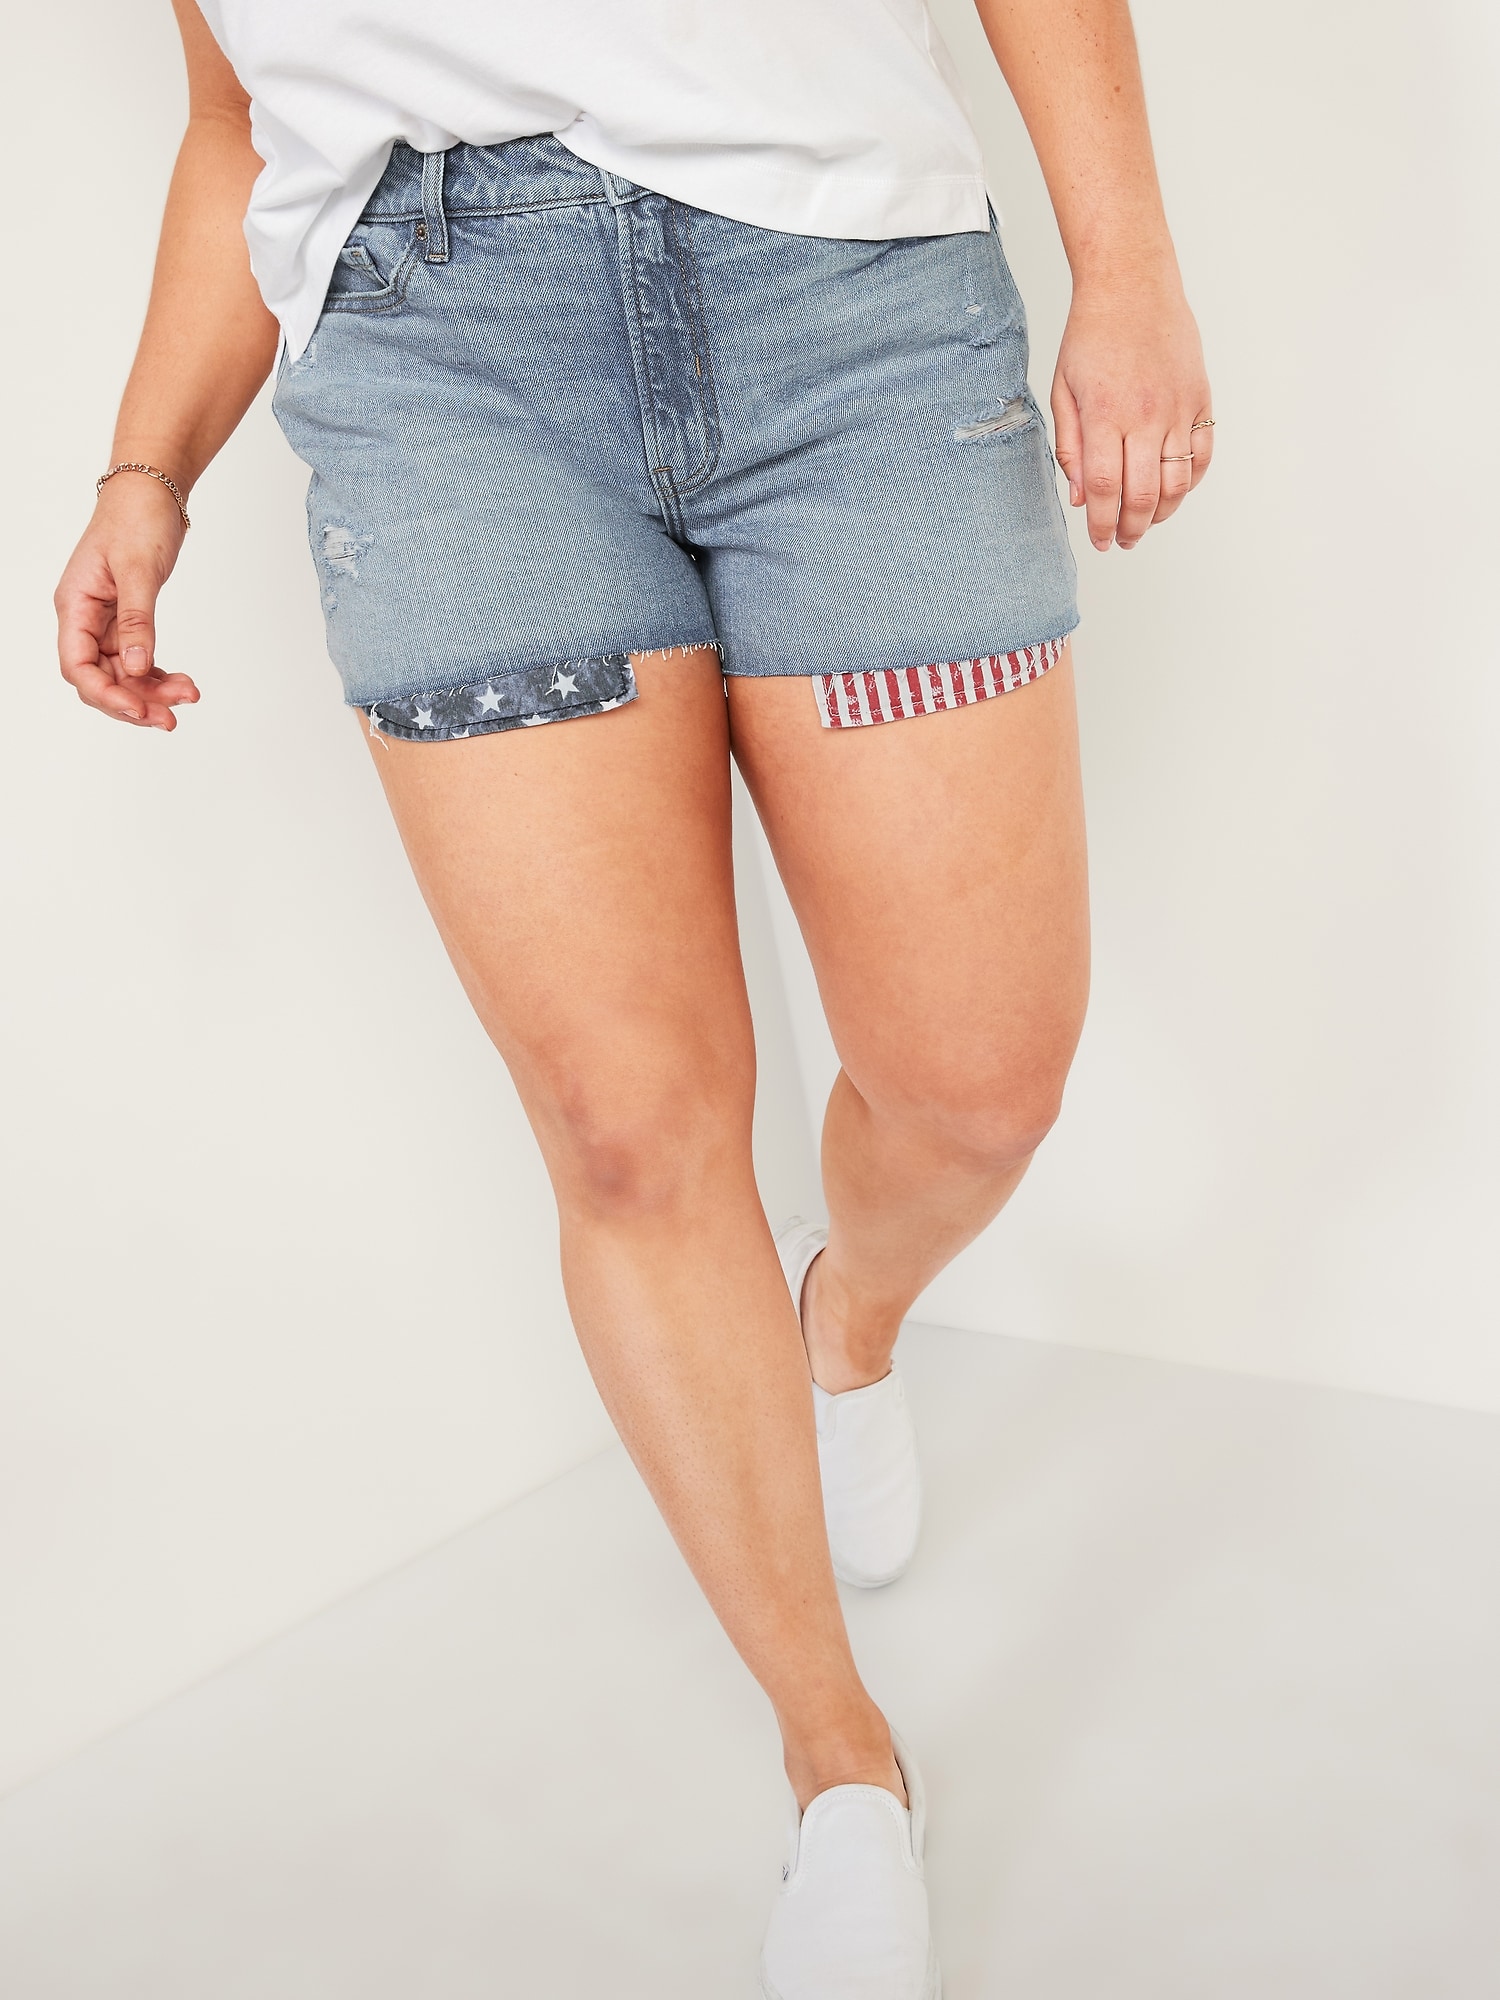 High-Waisted O.G. Americana Cut-Off Jean Shorts for Women -- 3-inch inseam